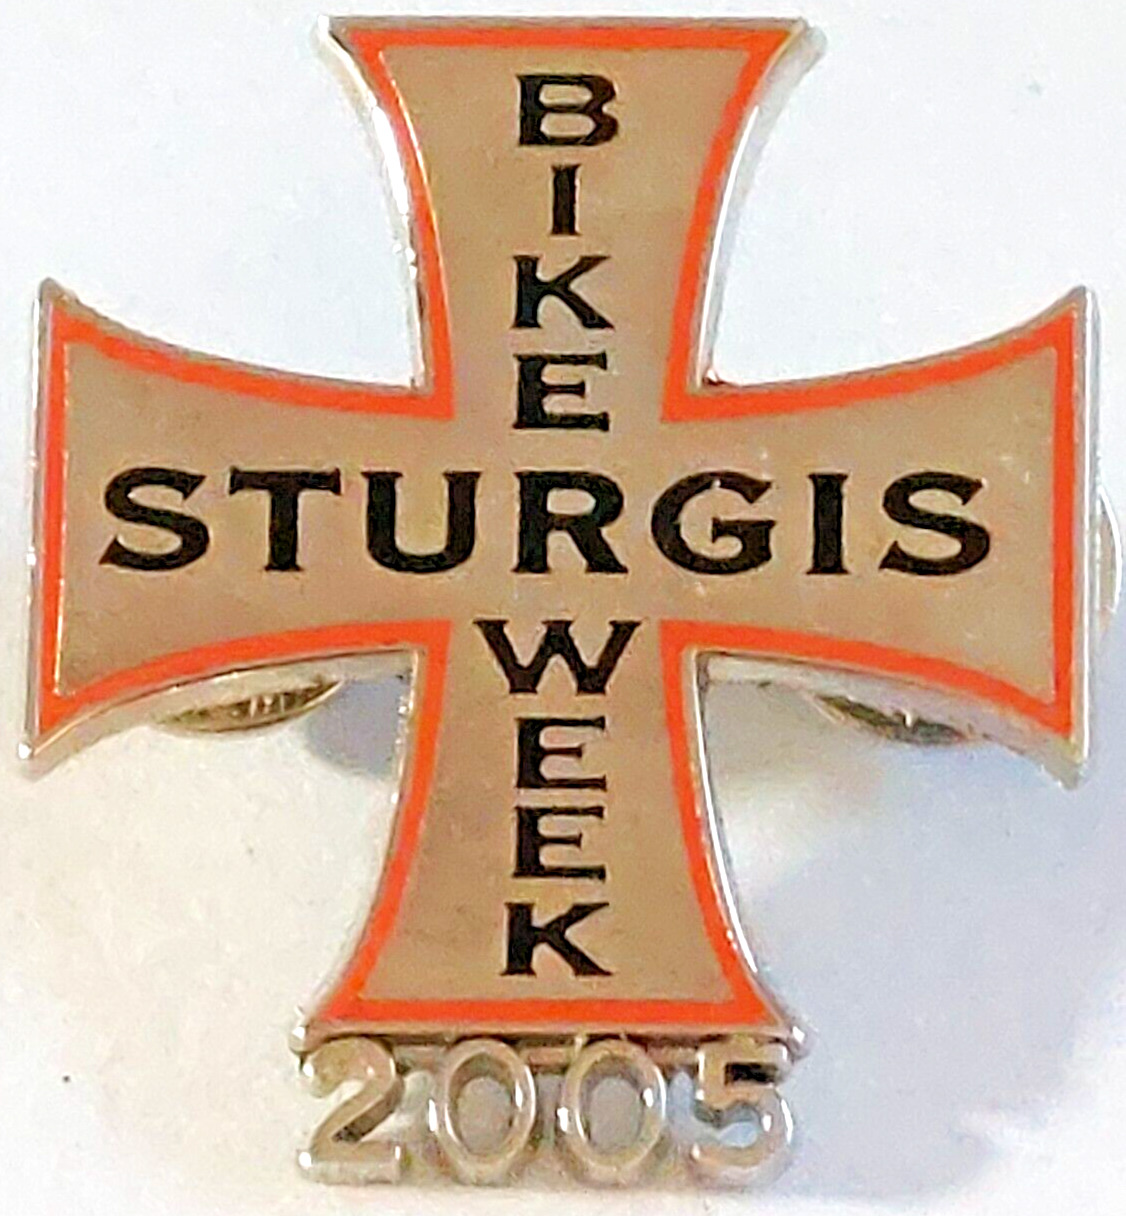 STURGIS 2005 Bike Week Cross Lapel Pin (090923)